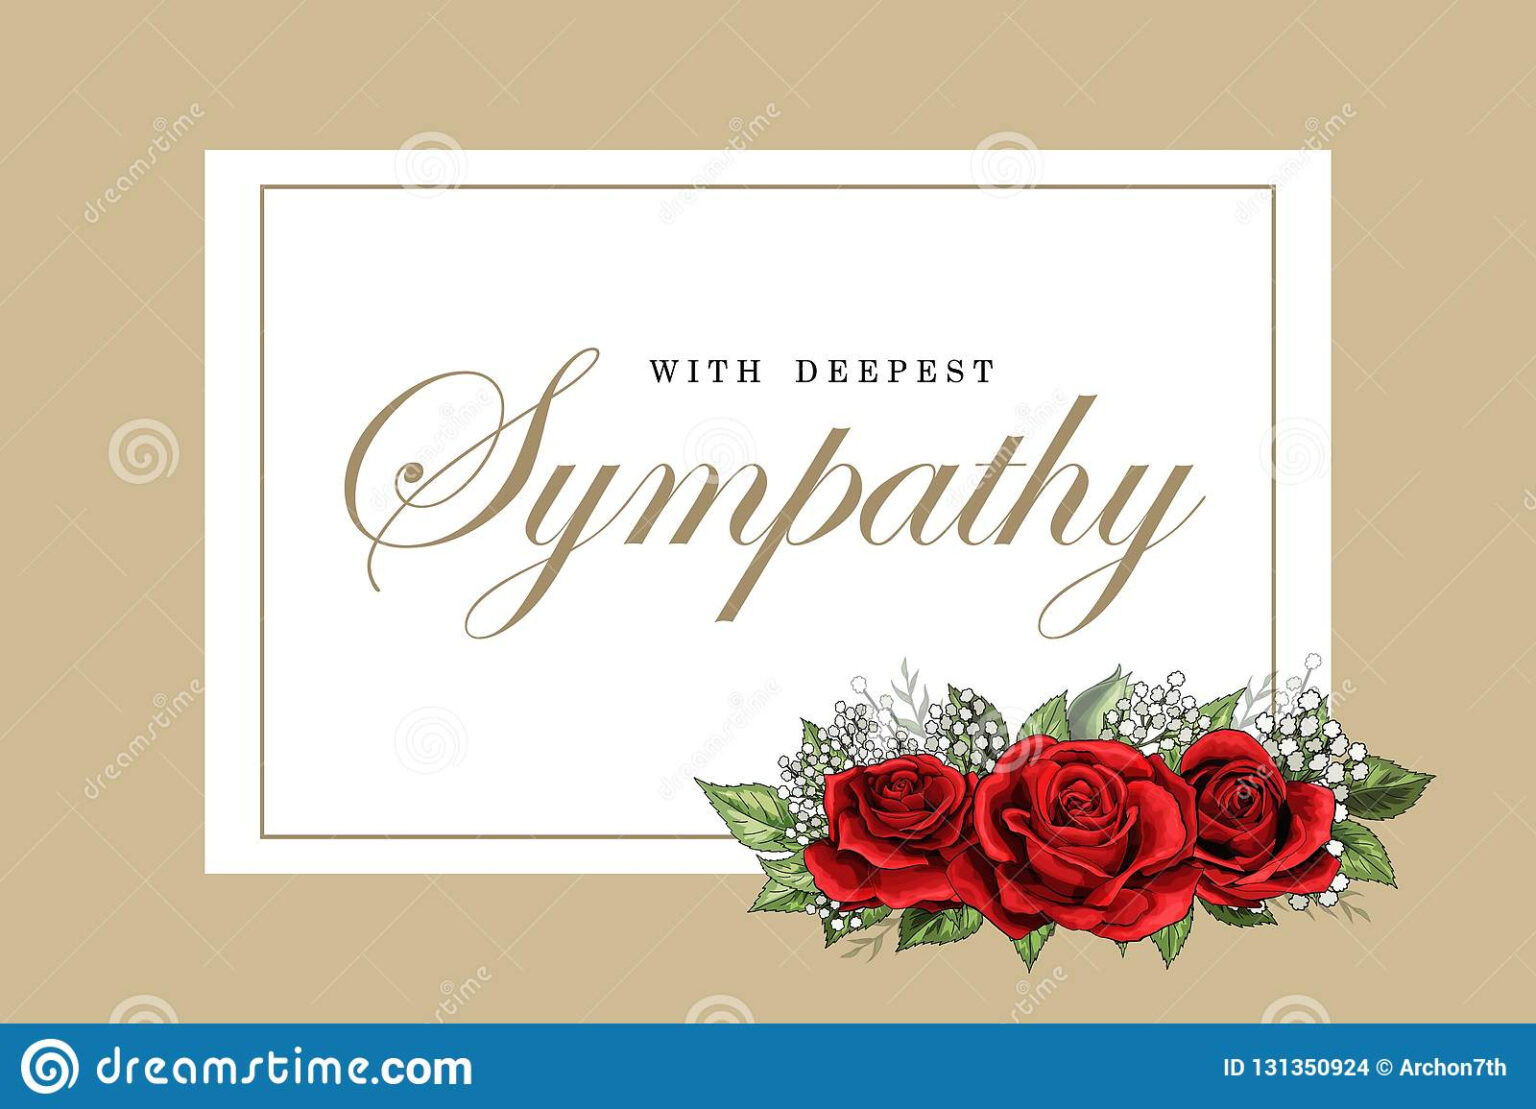 condolences-sympathy-card-floral-red-roses-bouquet-and-regarding